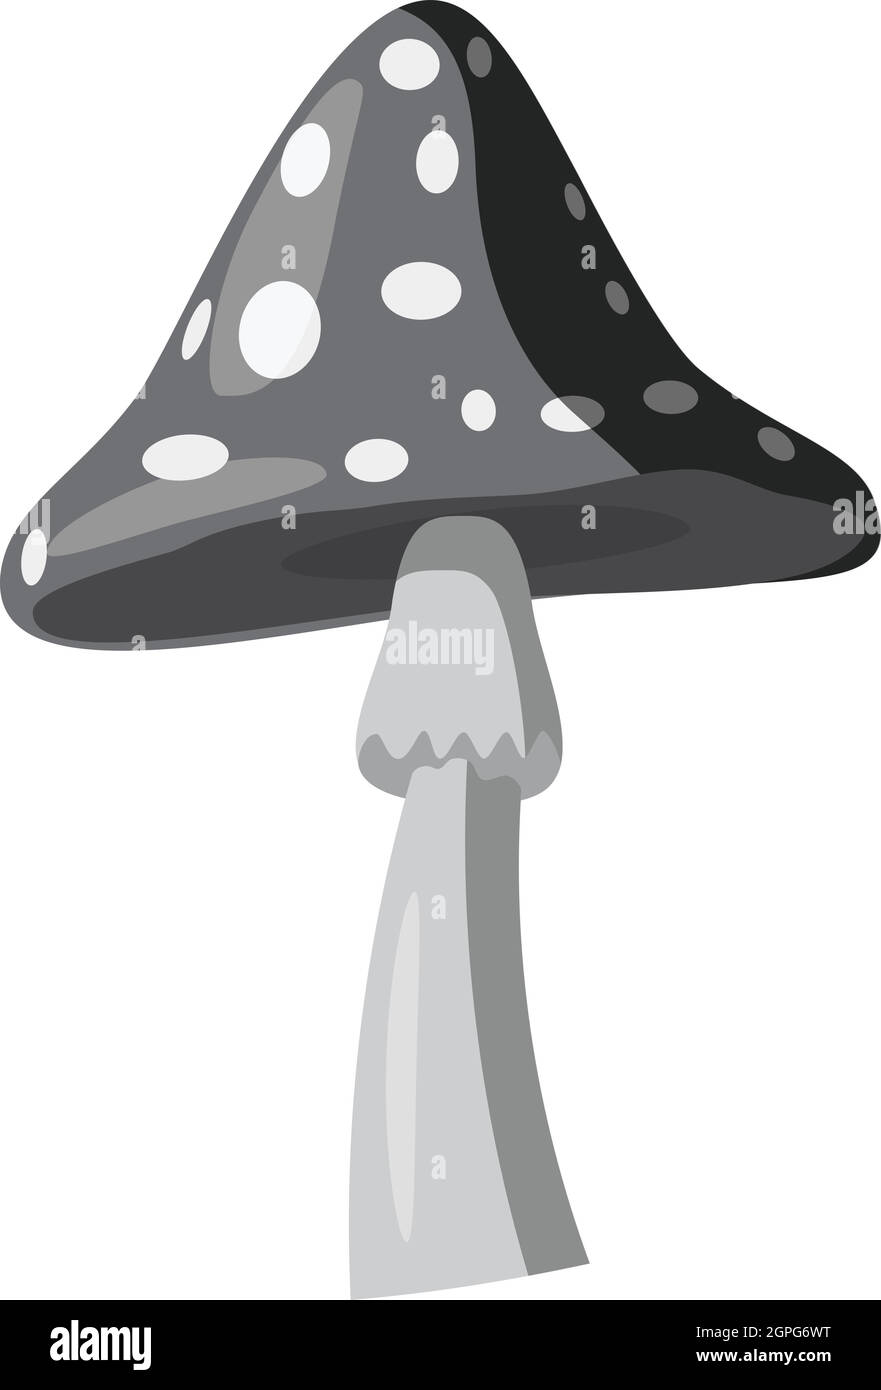 Amanita poisonous mushroom icon Stock Vector